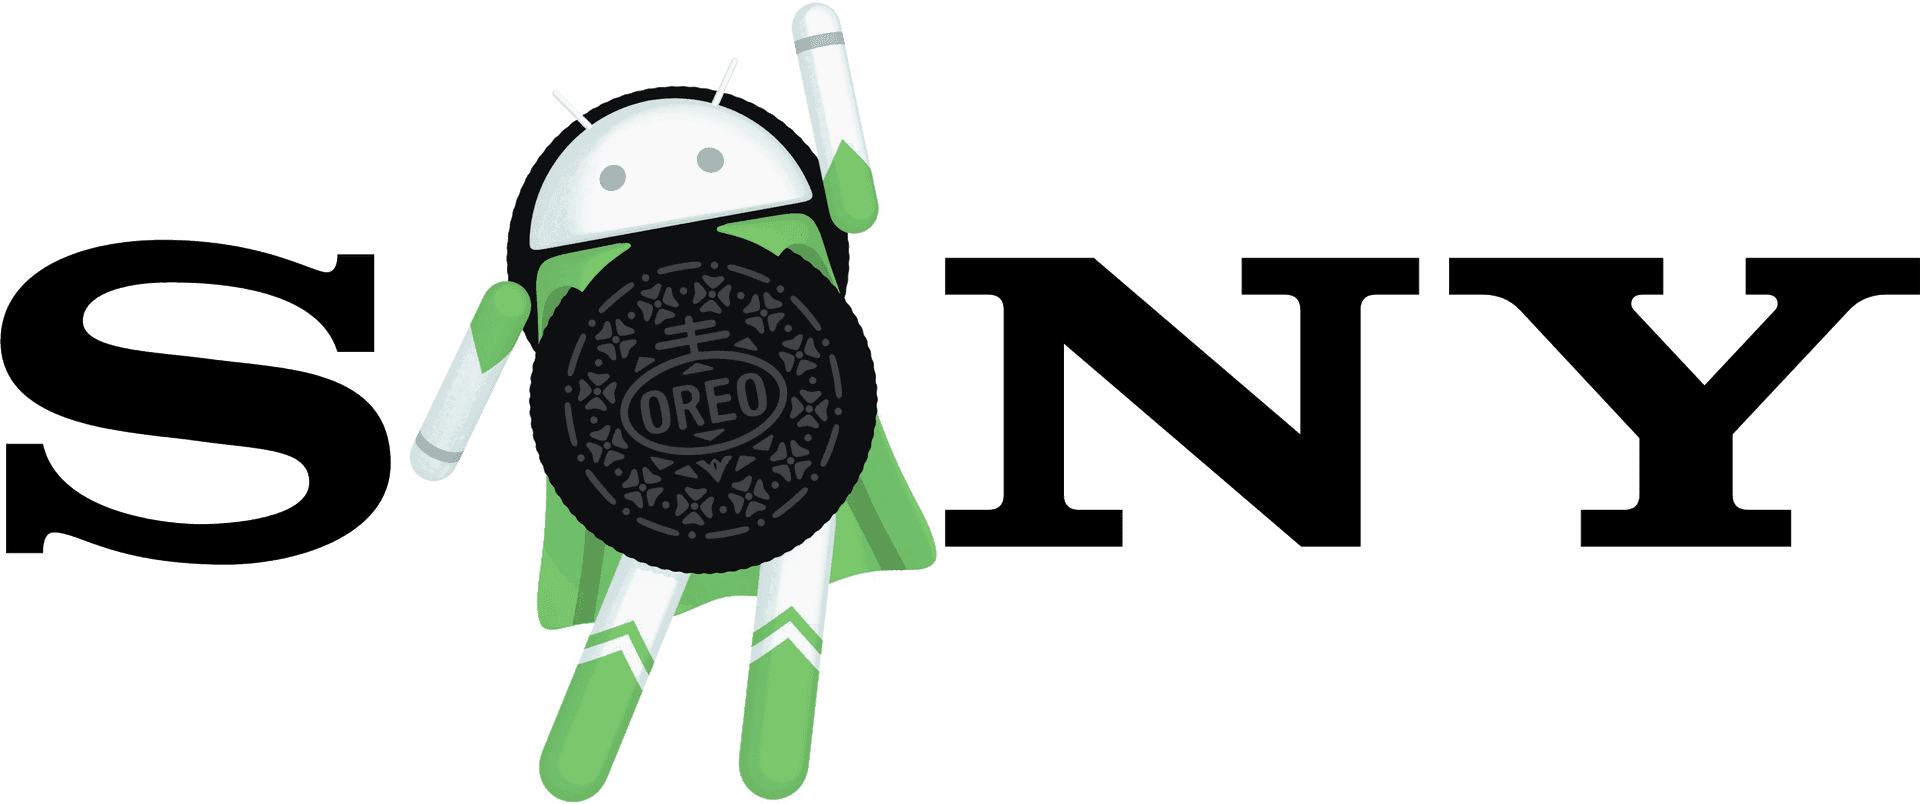 Sony Android Oreo Mashup Logo PNG